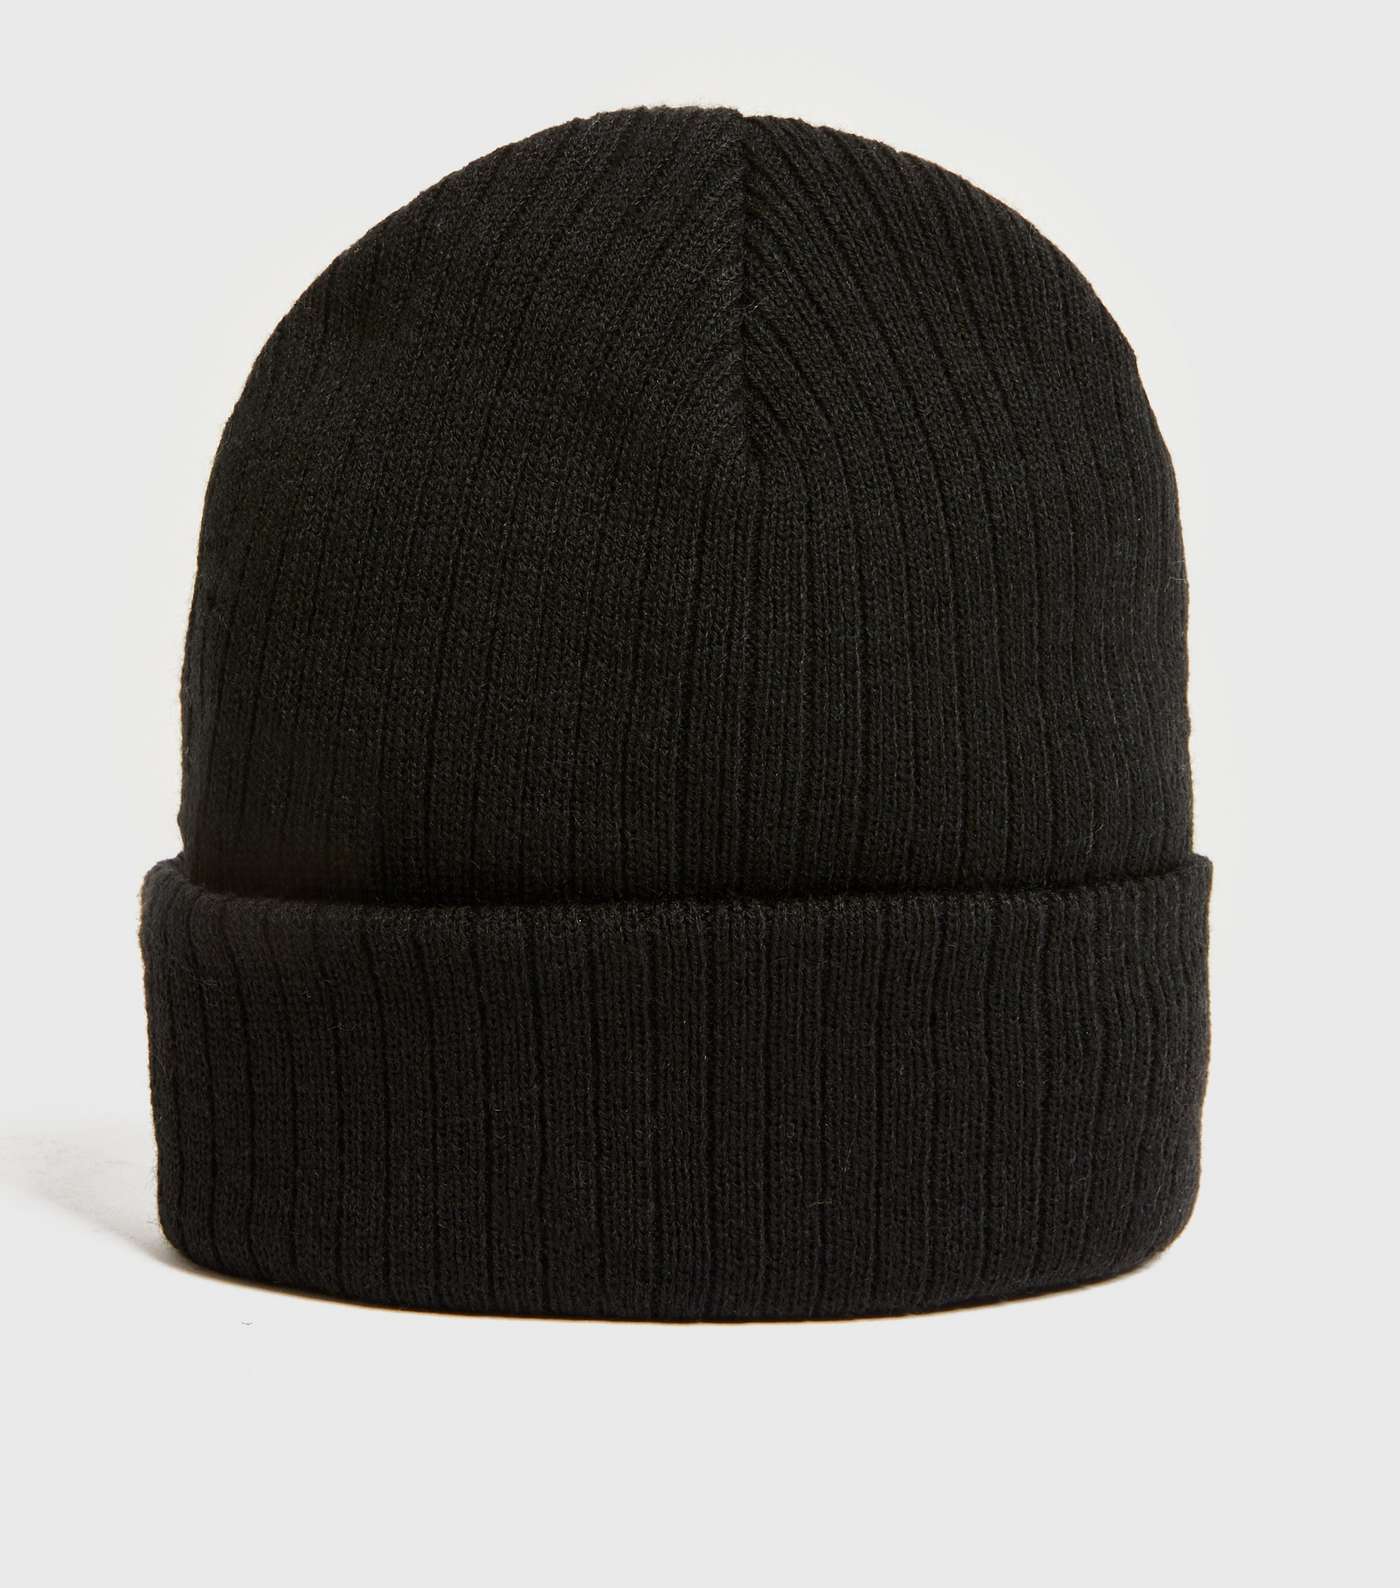 Black Ribbed Knit Beanie Hat